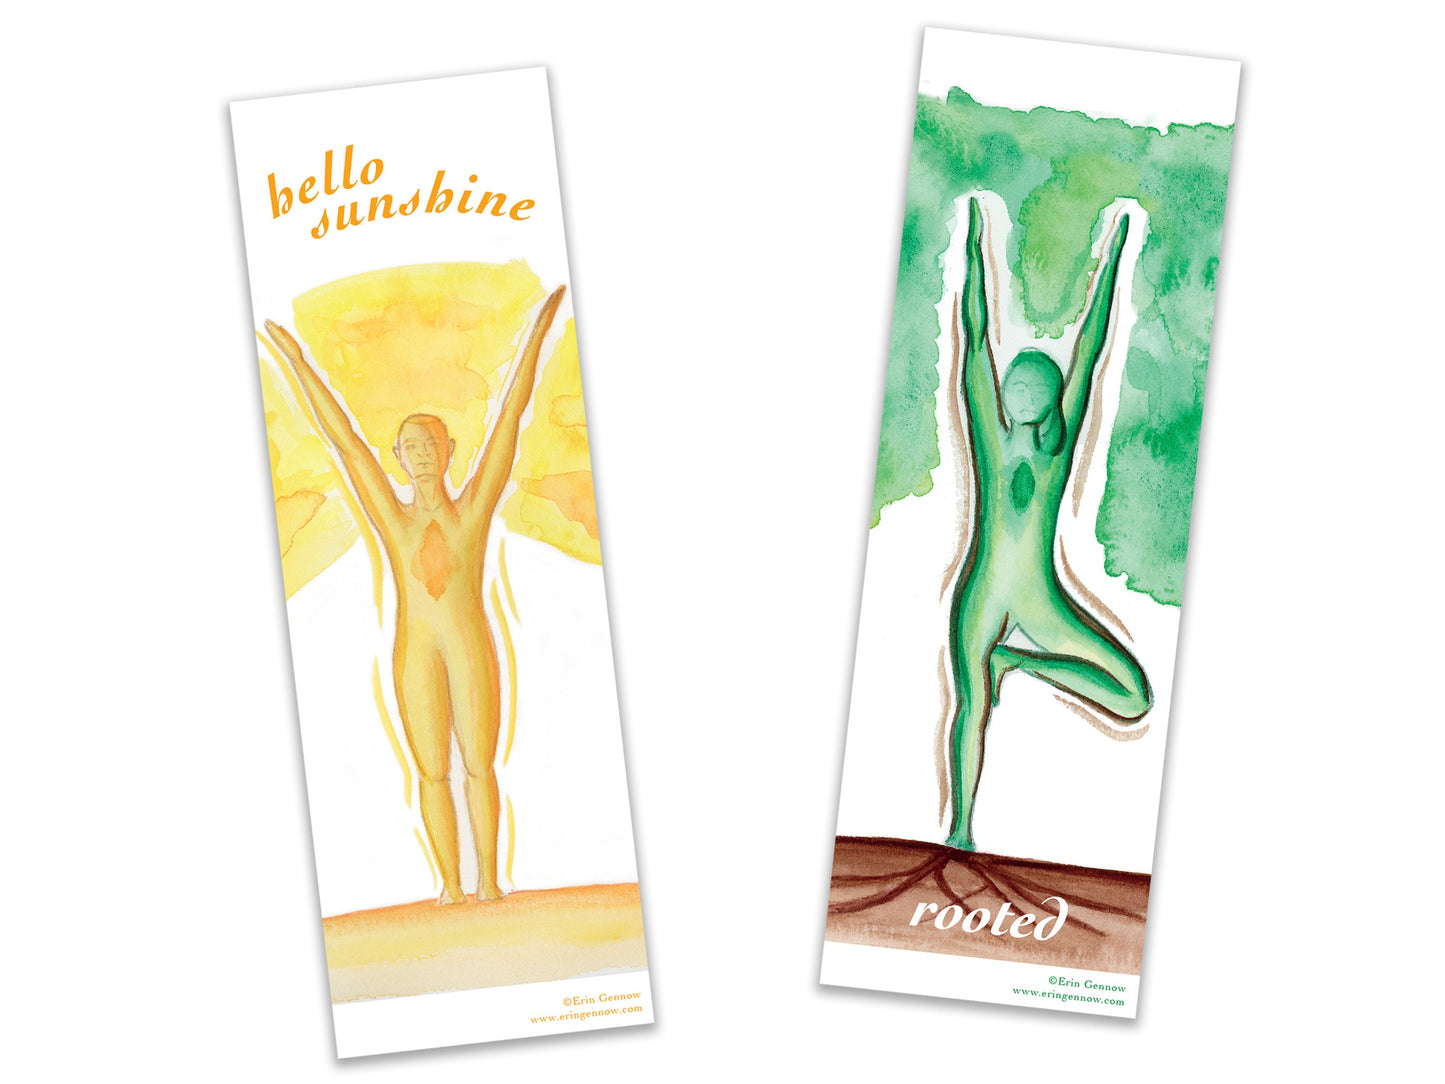 Bookmarks - Set of 4 - The Yoga Series - Warrior 2, Sun Salutation, Tree Pose, Downward Dog, Handmade, 100% cotton rag heavy weight paper